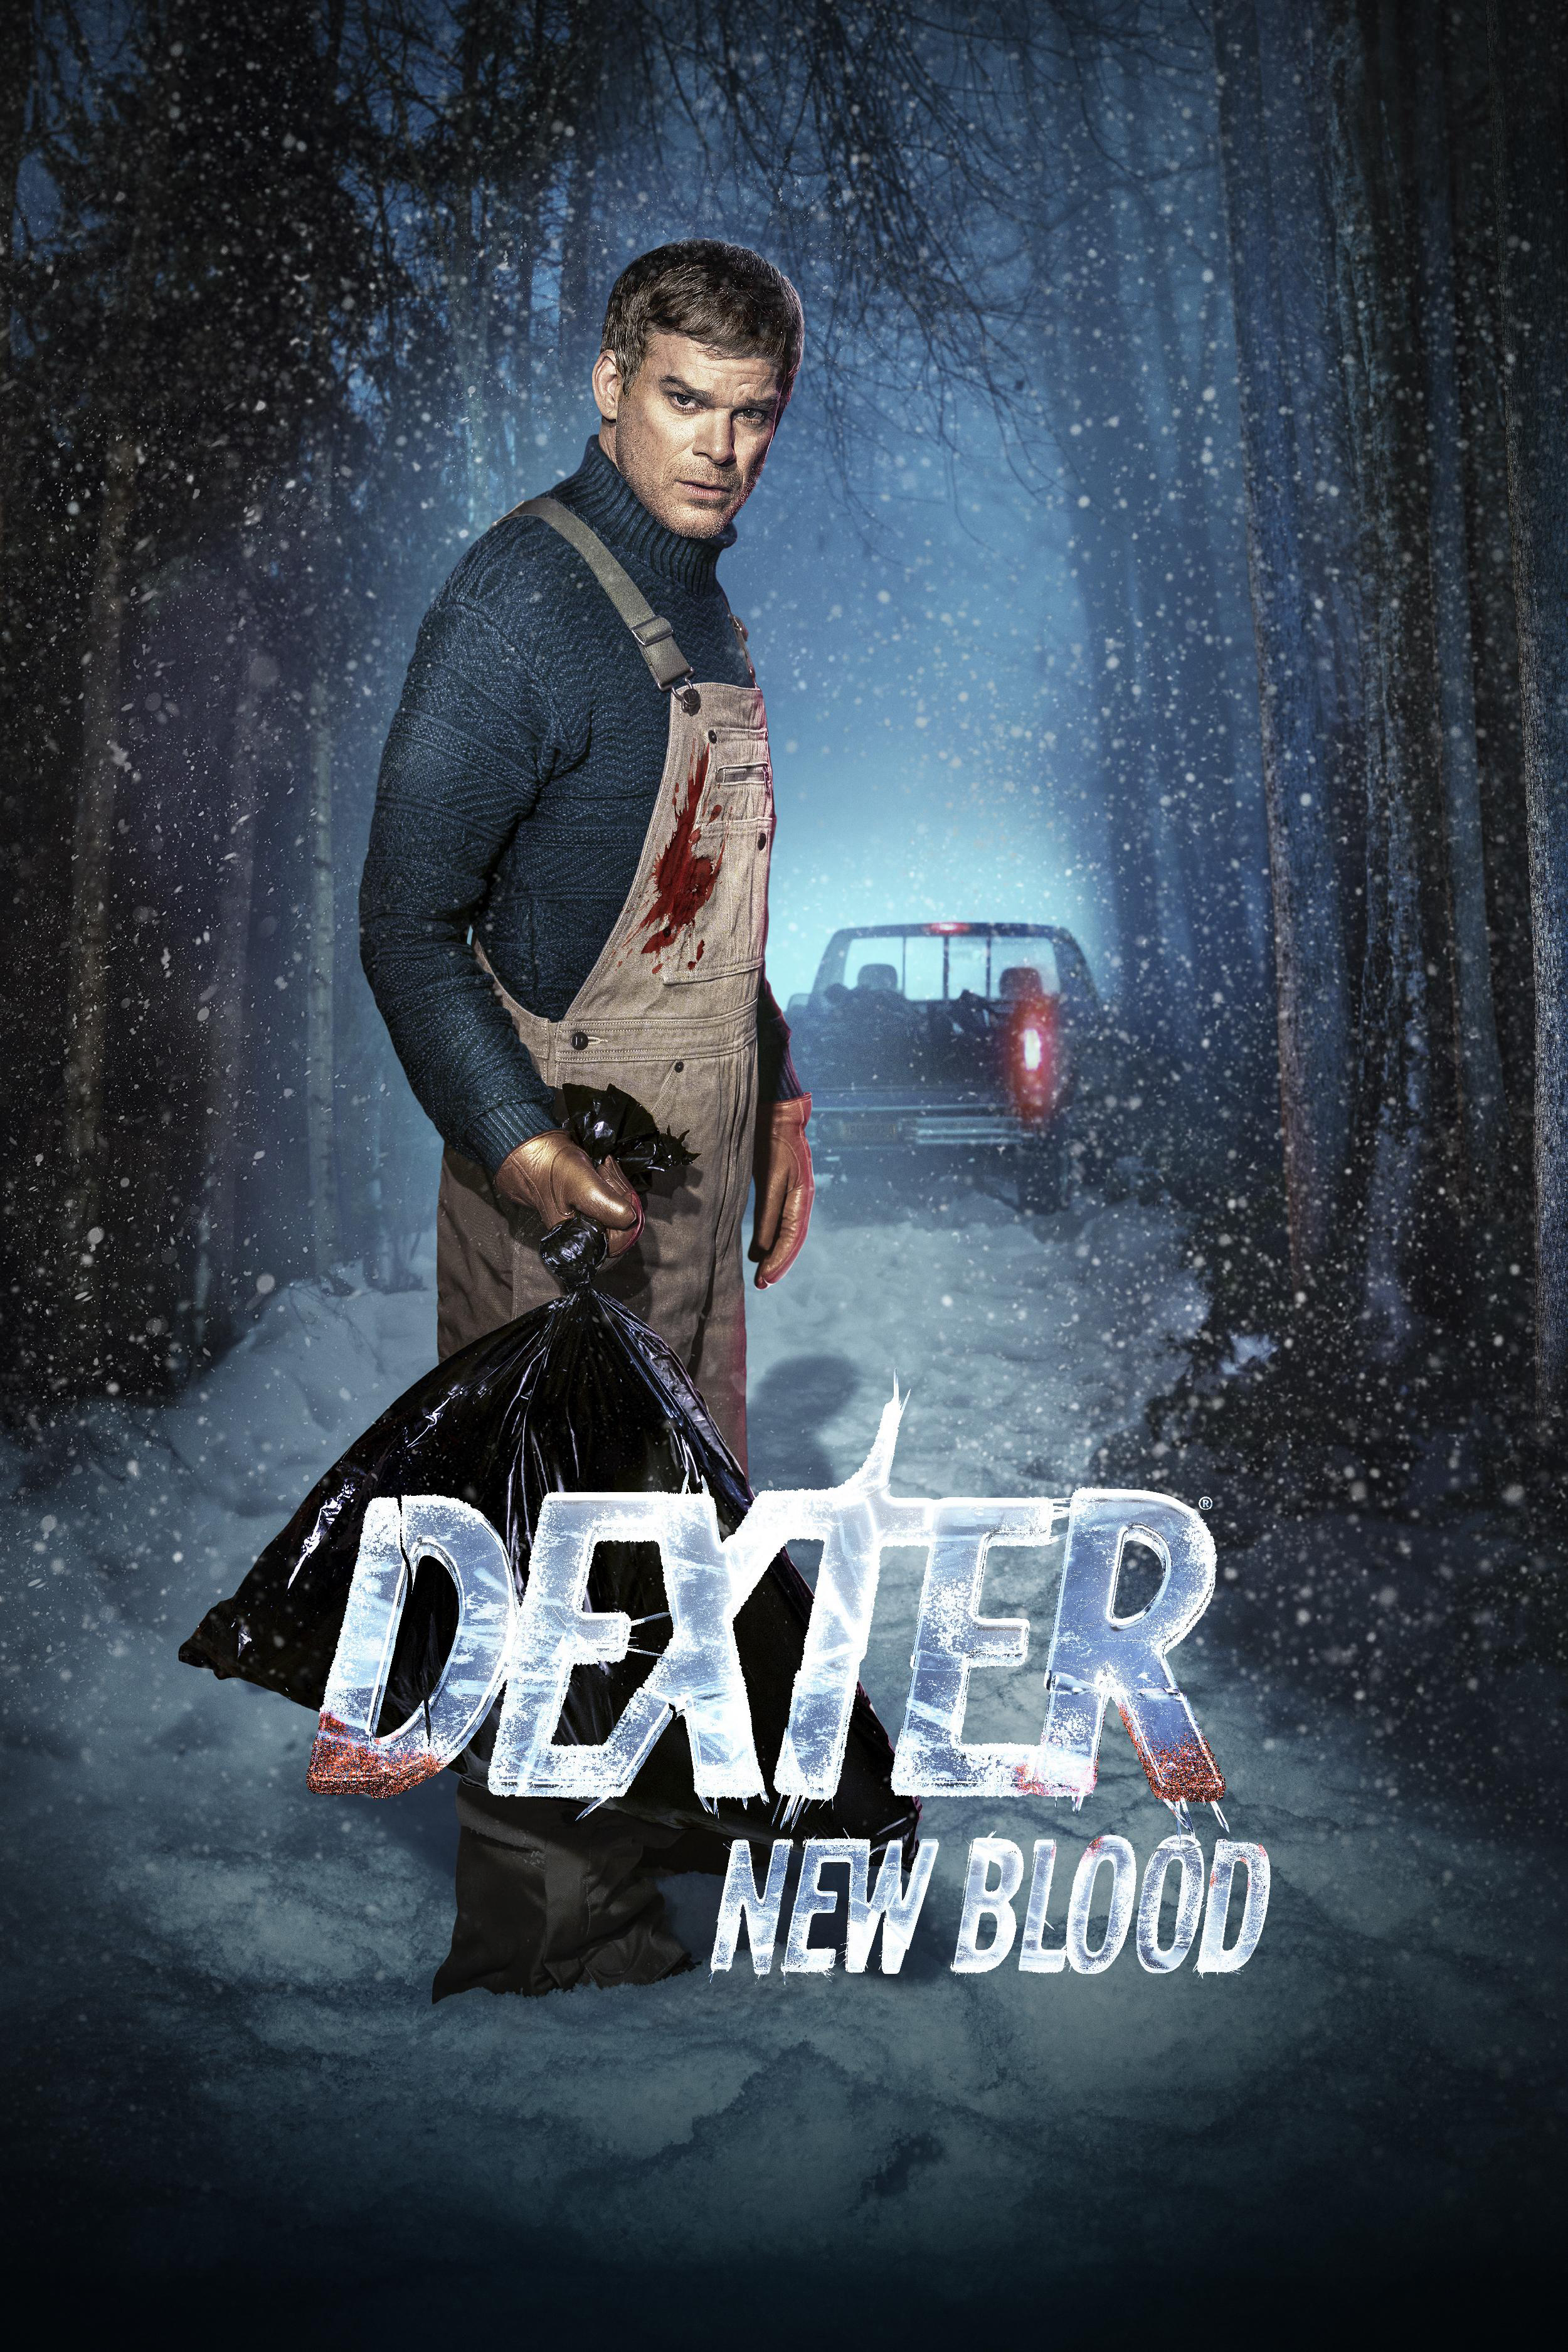 Dexter: The Complete Series (Dexter / Dexter New Blood Season 1) (Blu-Ray)